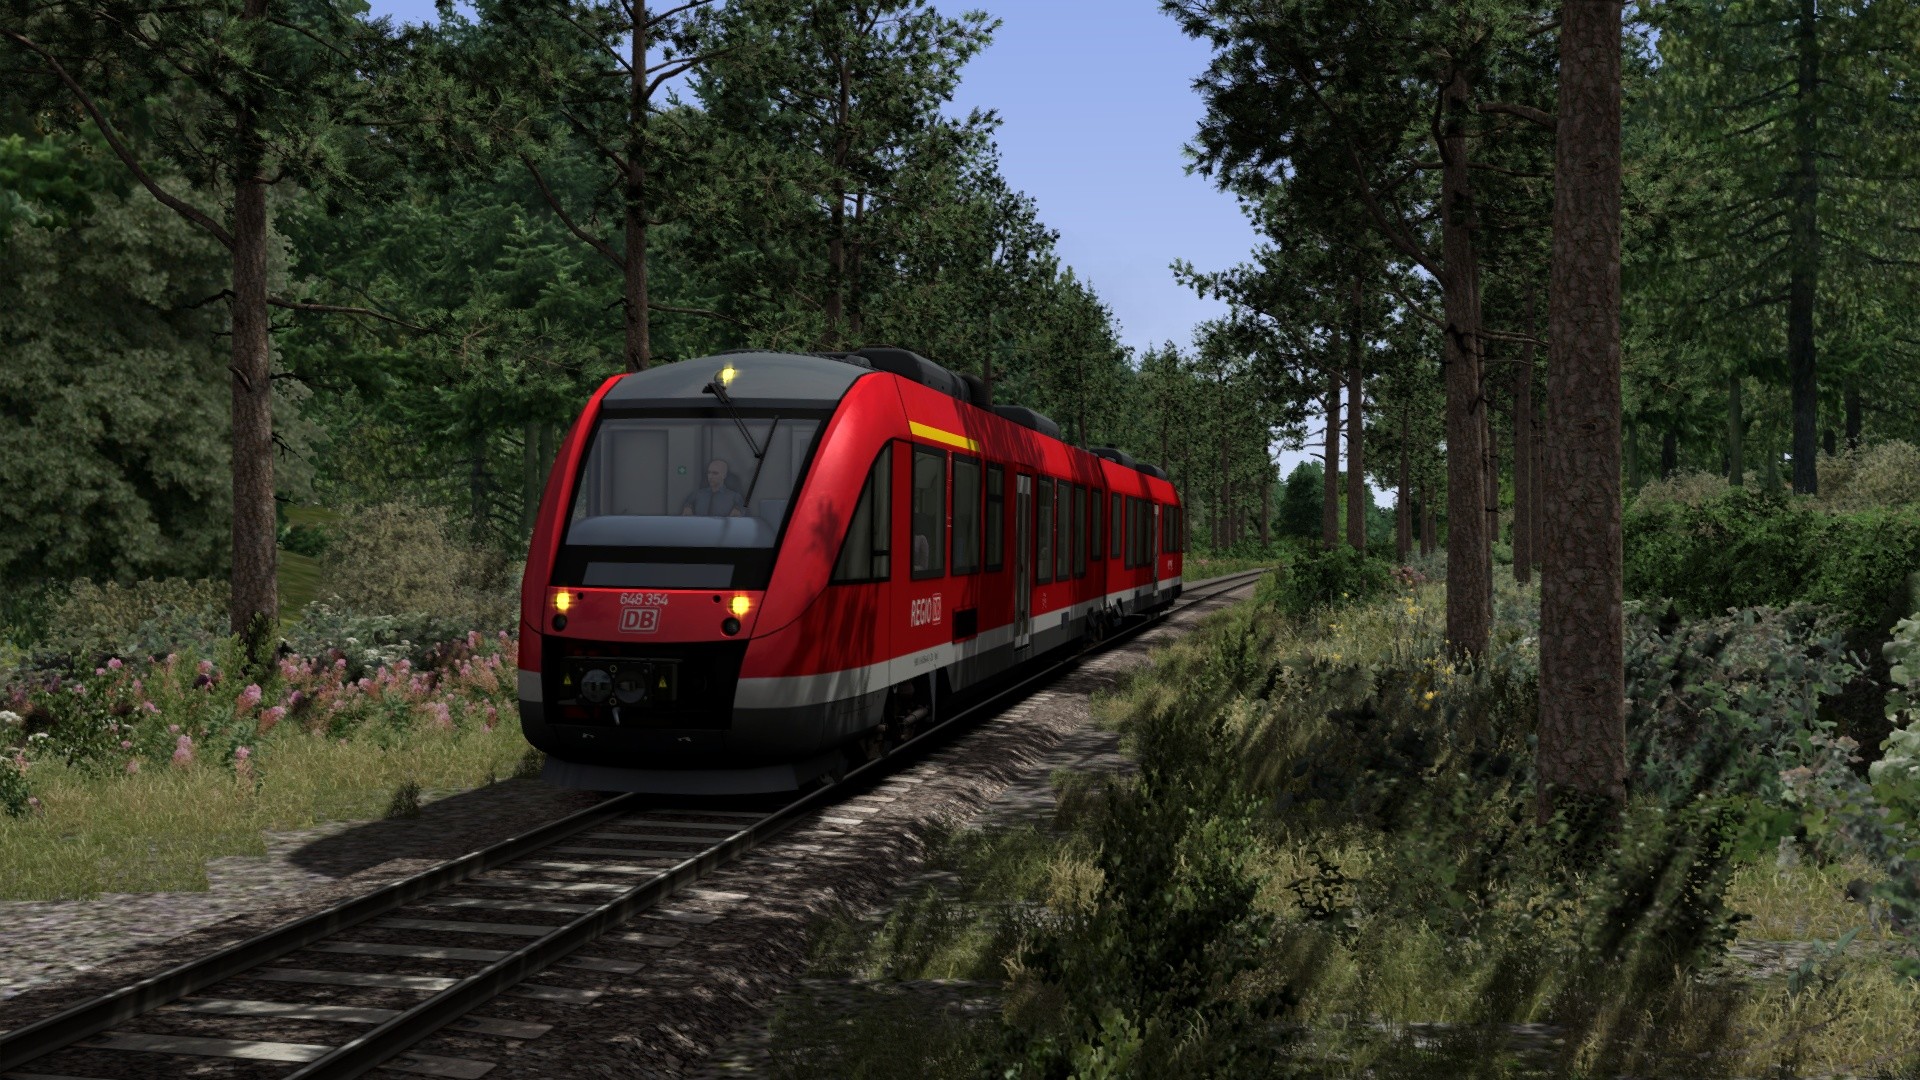 Train Simulator: Norddeutsche-Bahn: Kiel - Lübeck Route Add-On DLC Steam CD Key 5.13$